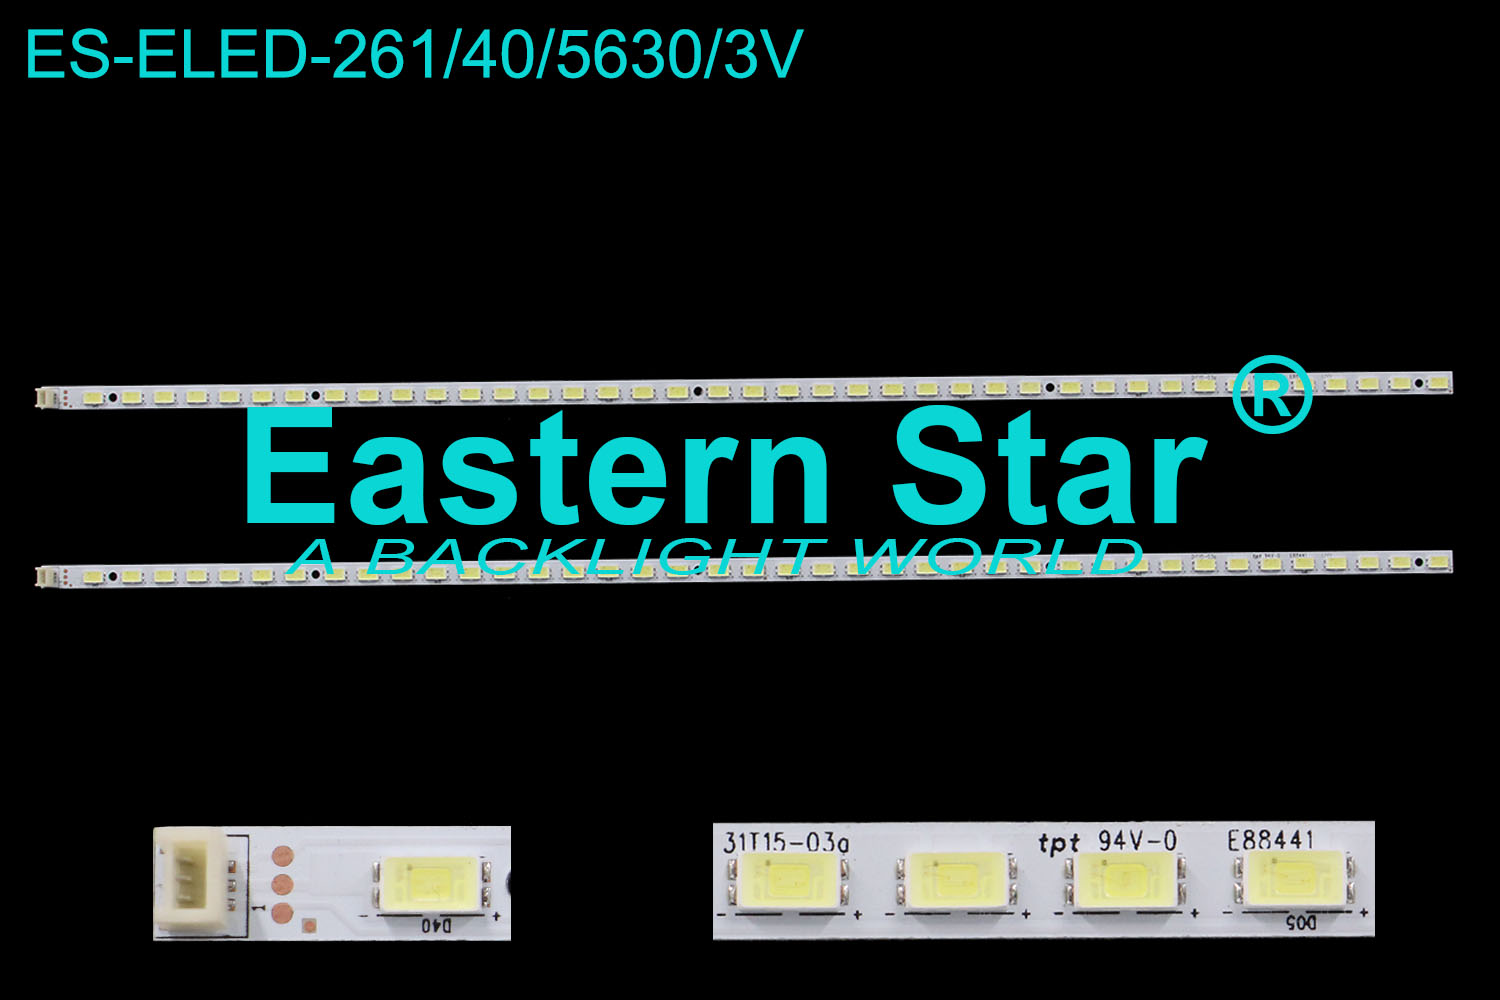 ES-ELED-261 ELED/EDGE TV backlight 32'' 40LEDs use for  Haier /Toshiba 31T15-03a 73.31T14.004-6-SK1 LED STRIPS(2)